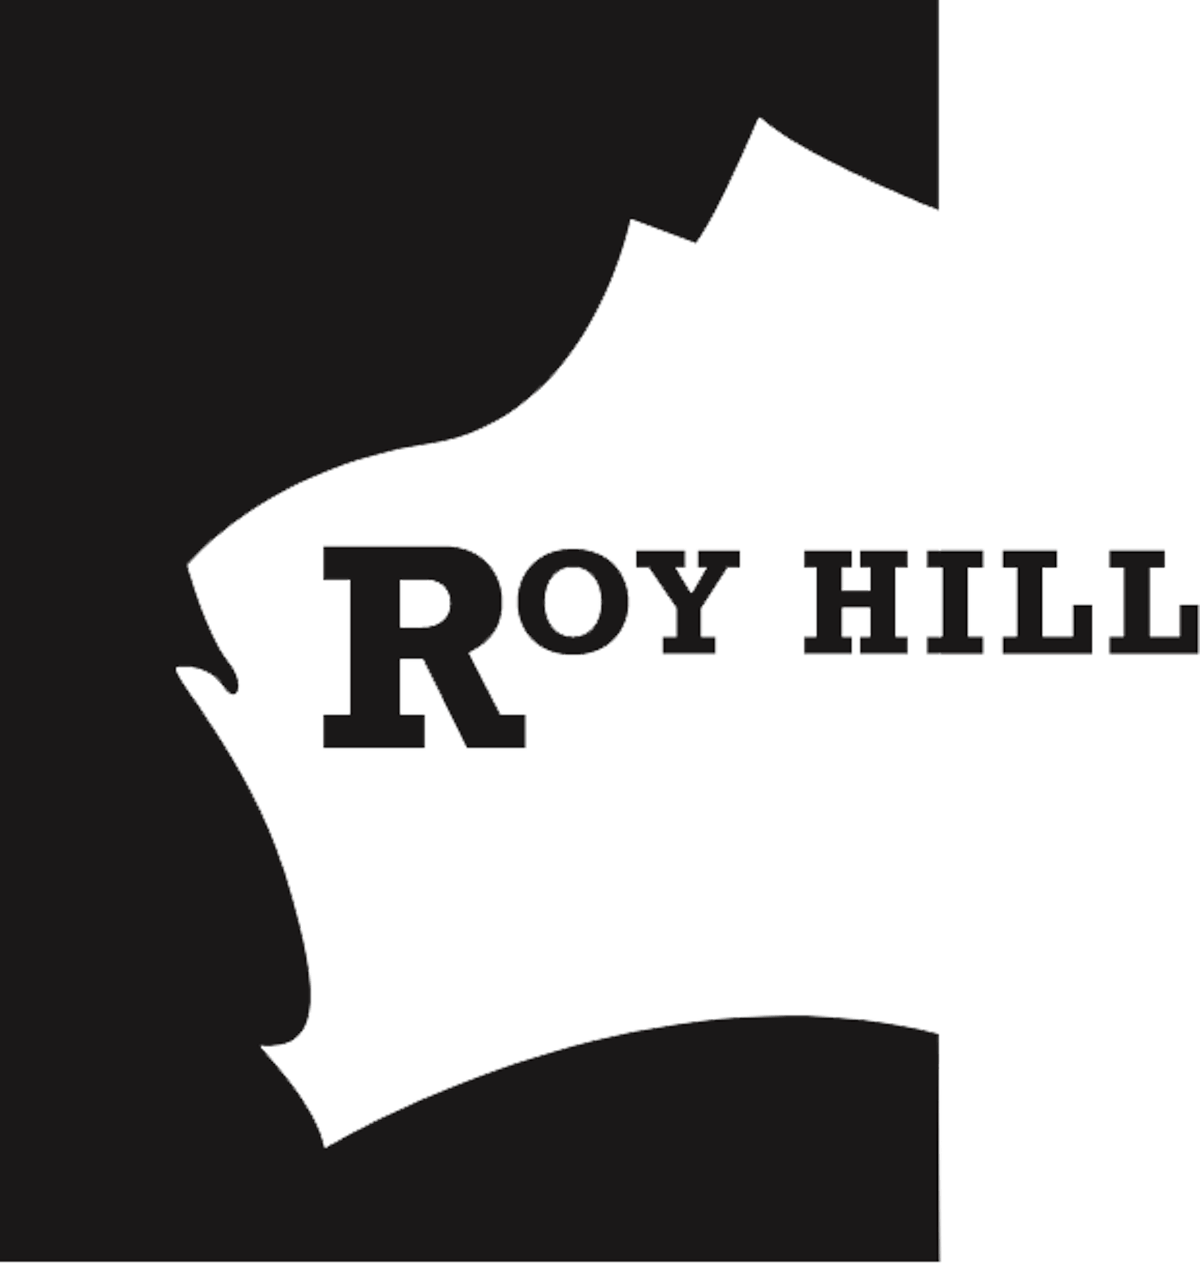 Roy hill